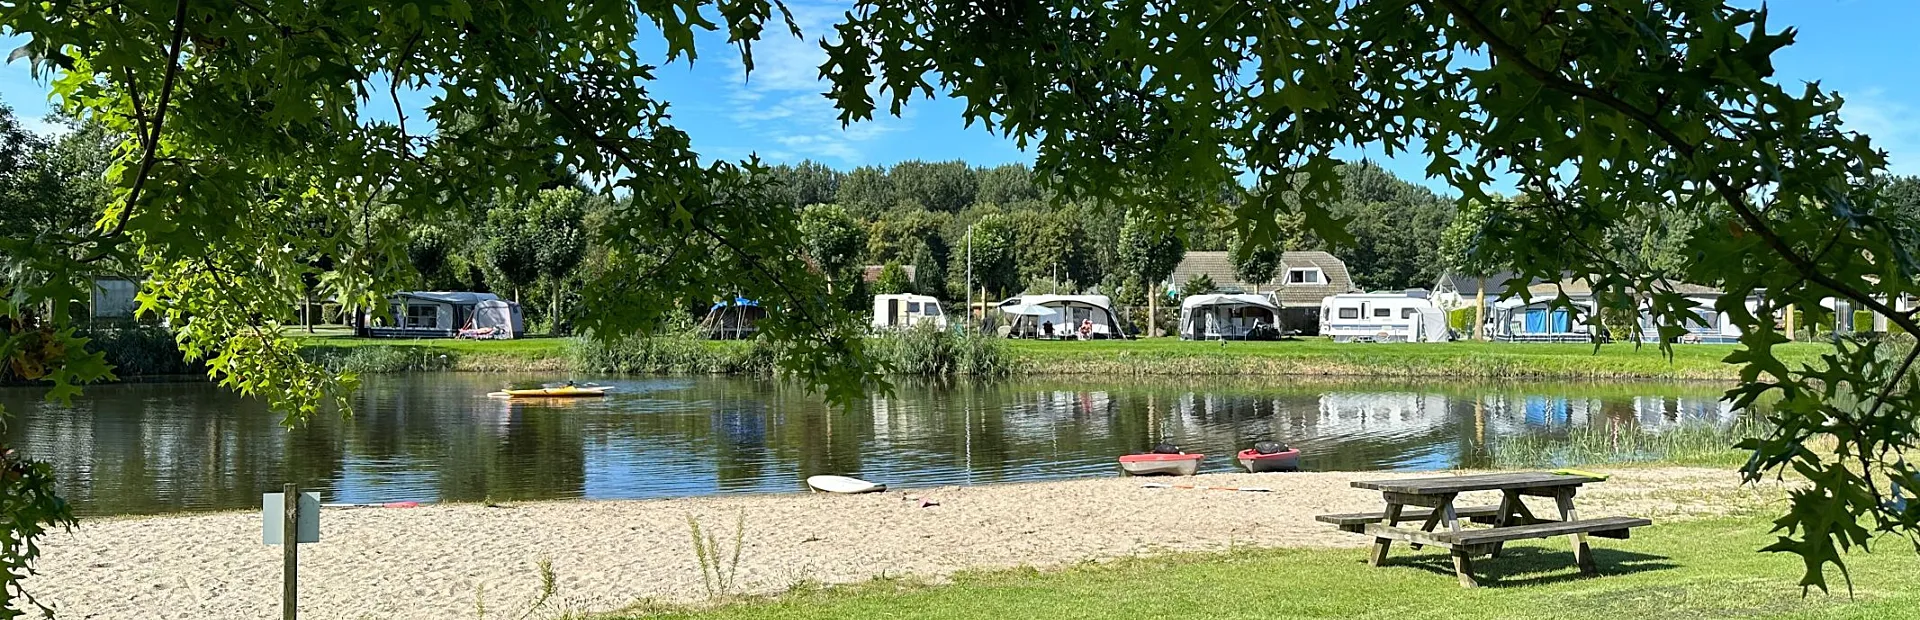 Naturistencampingplatz Niederlande Pond camping 3